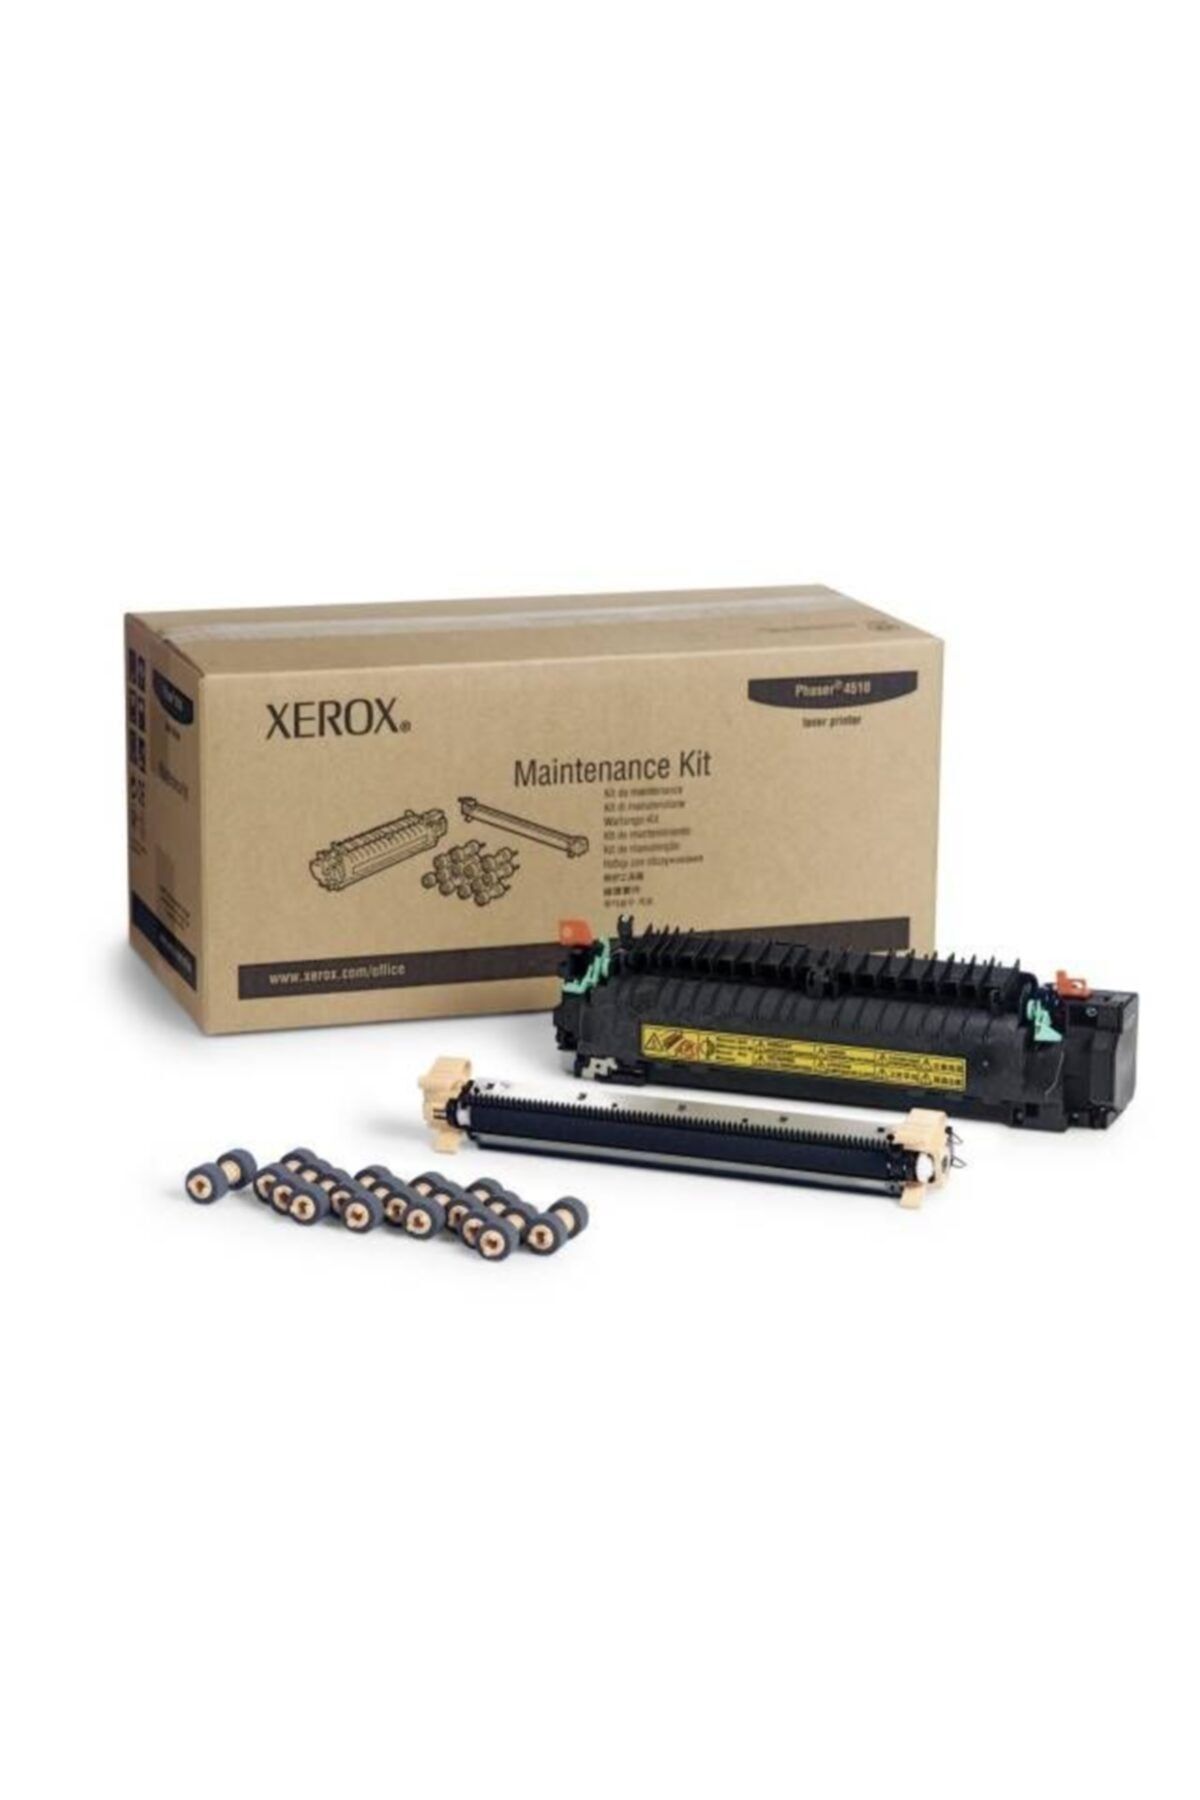 Xerox 4510 108r00718 Orjinal Bakım Kiti (maintenance Kit)